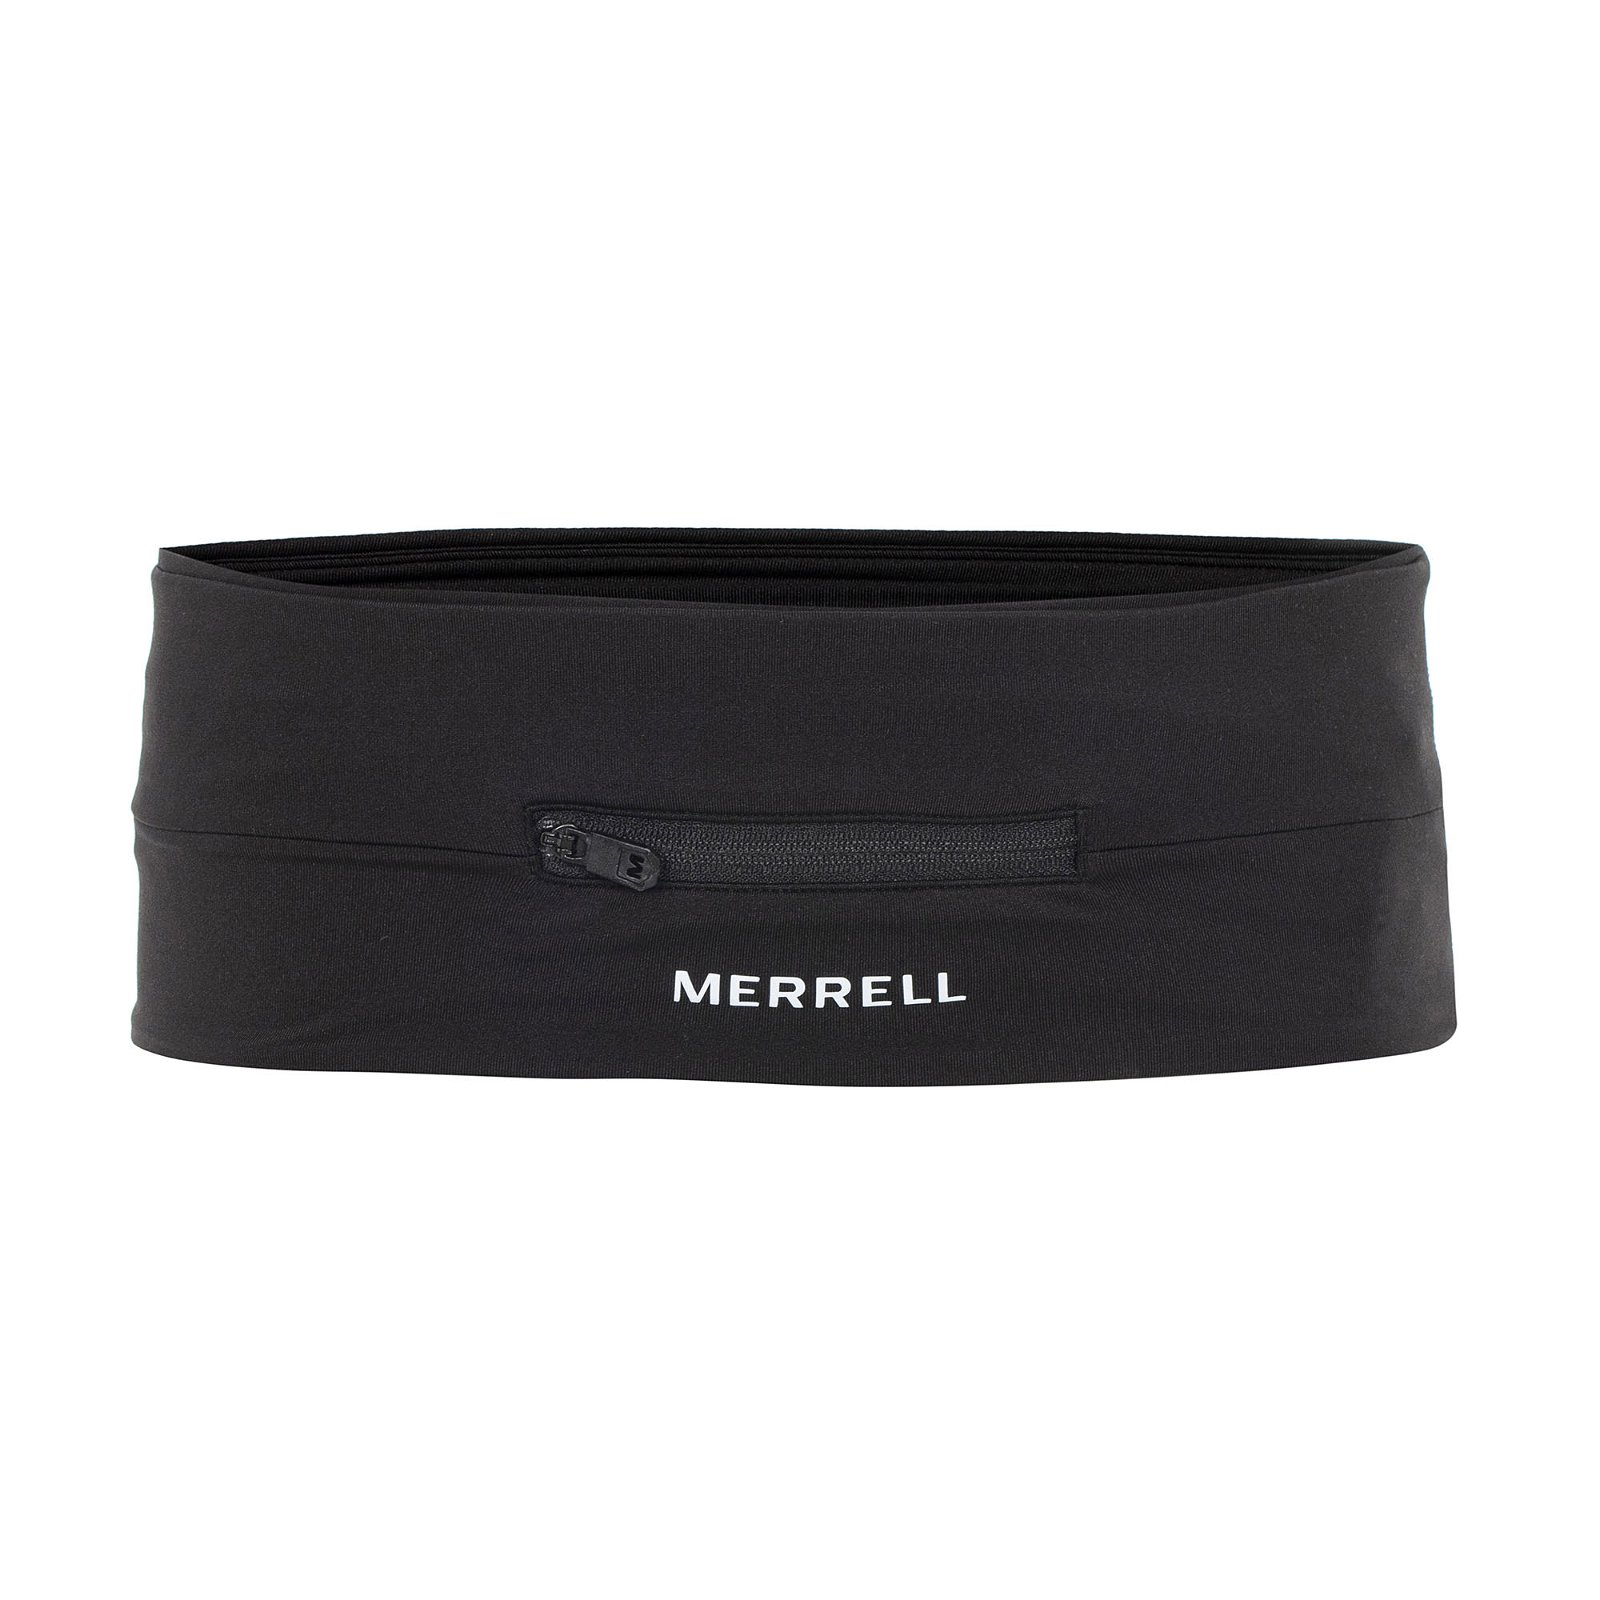 Merrell Bel Çantası - Siyah - 1